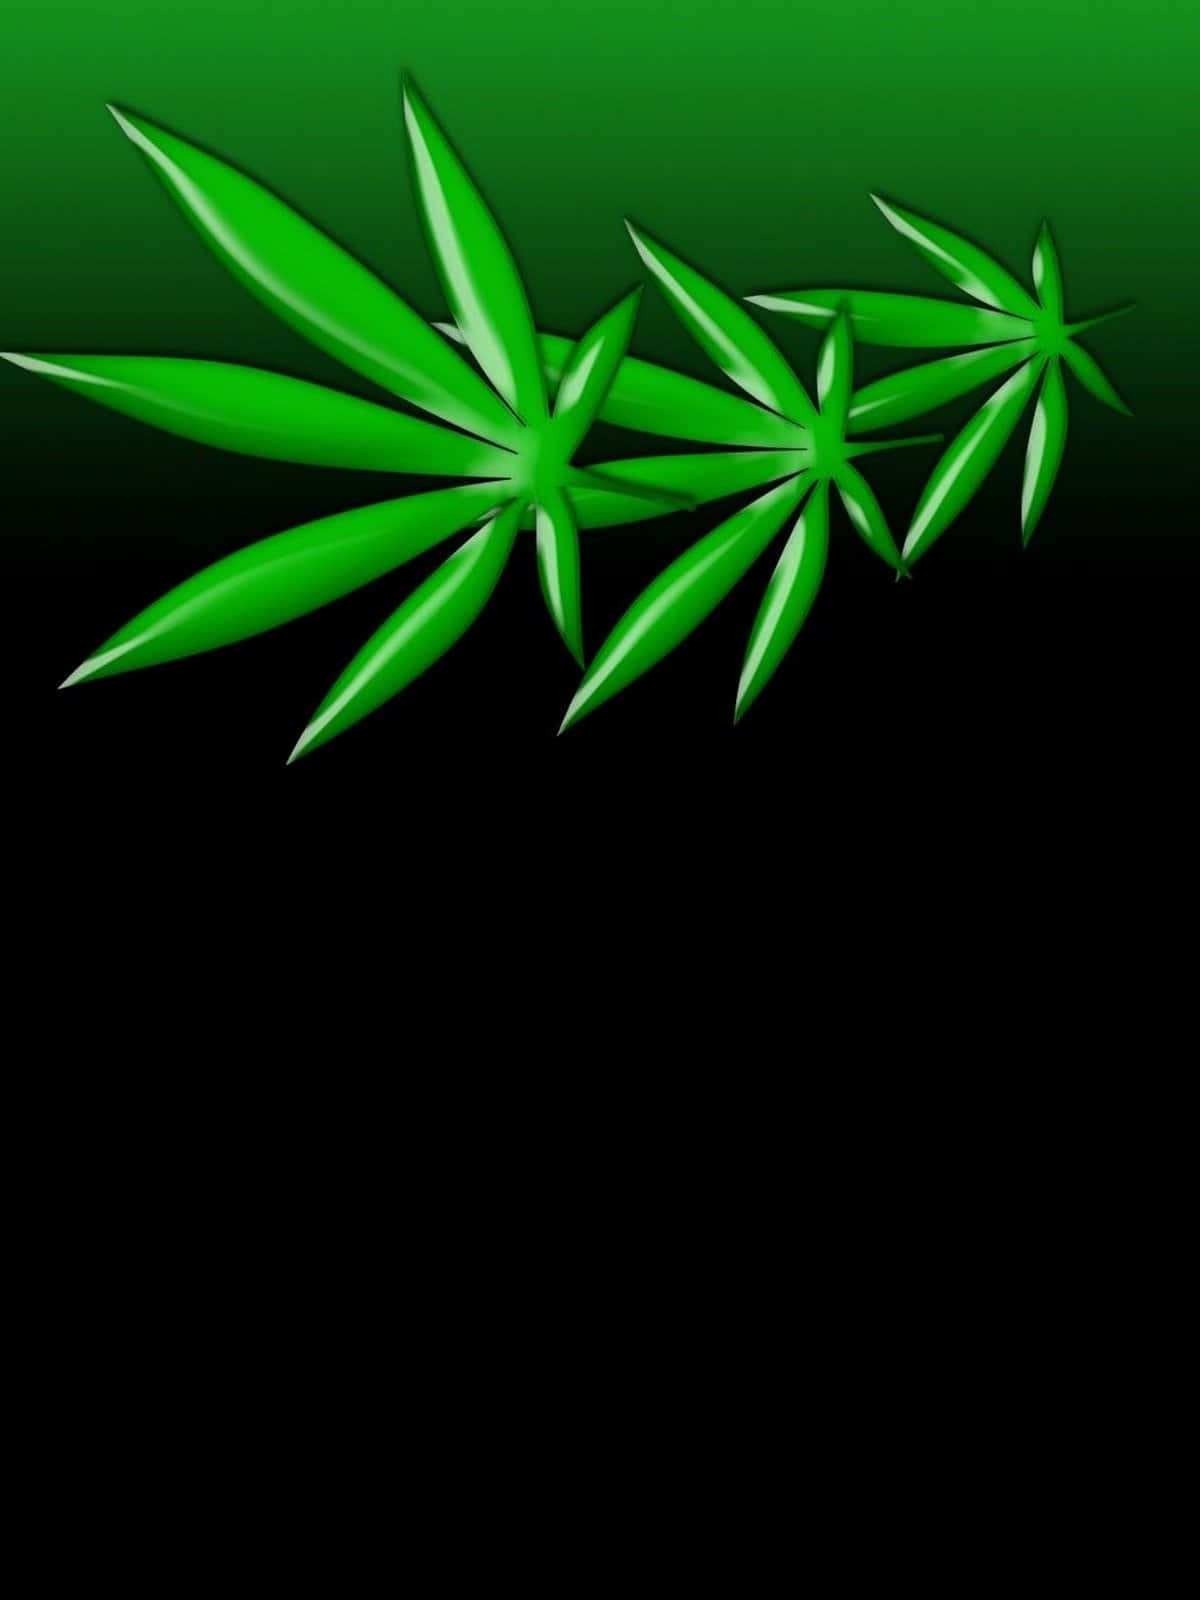 Stoner Cannabis Iphone Wallpaper